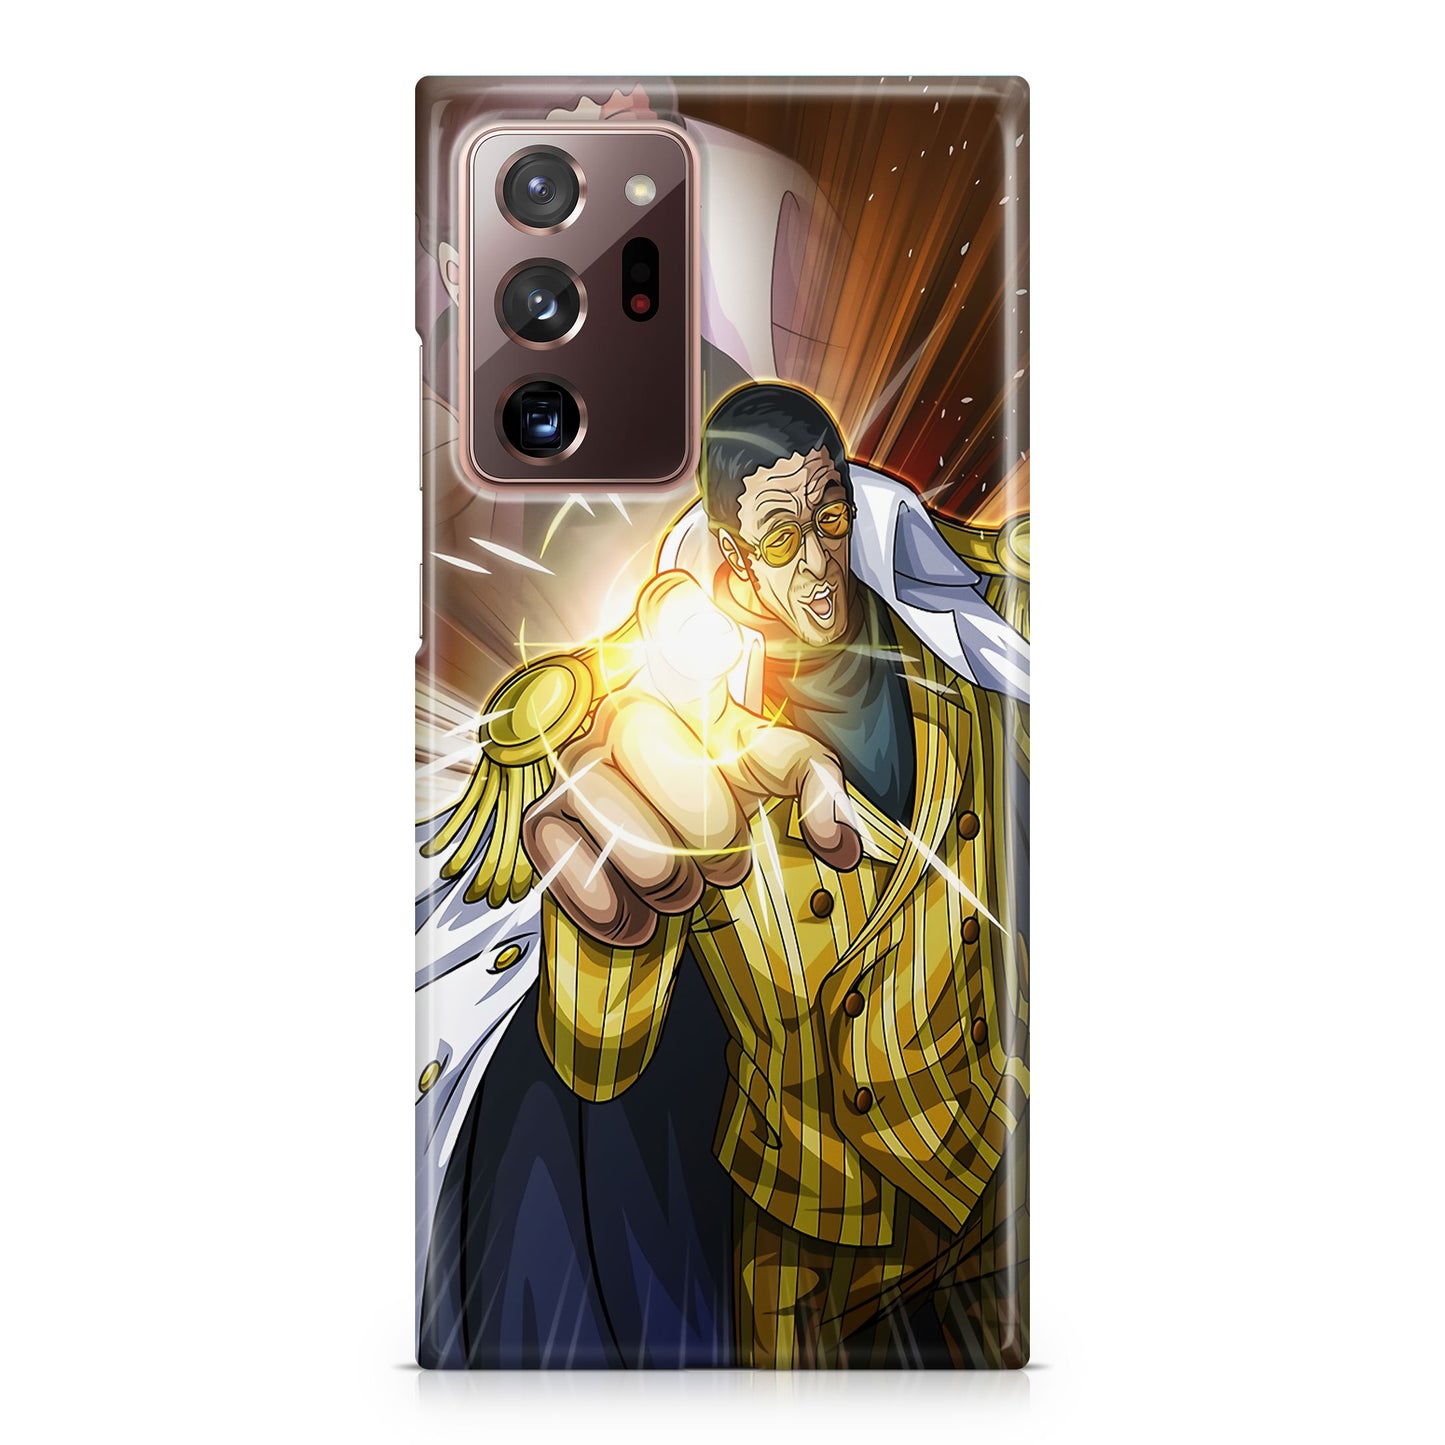 Borsalino Amaterasu Galaxy Note 20 Ultra Case